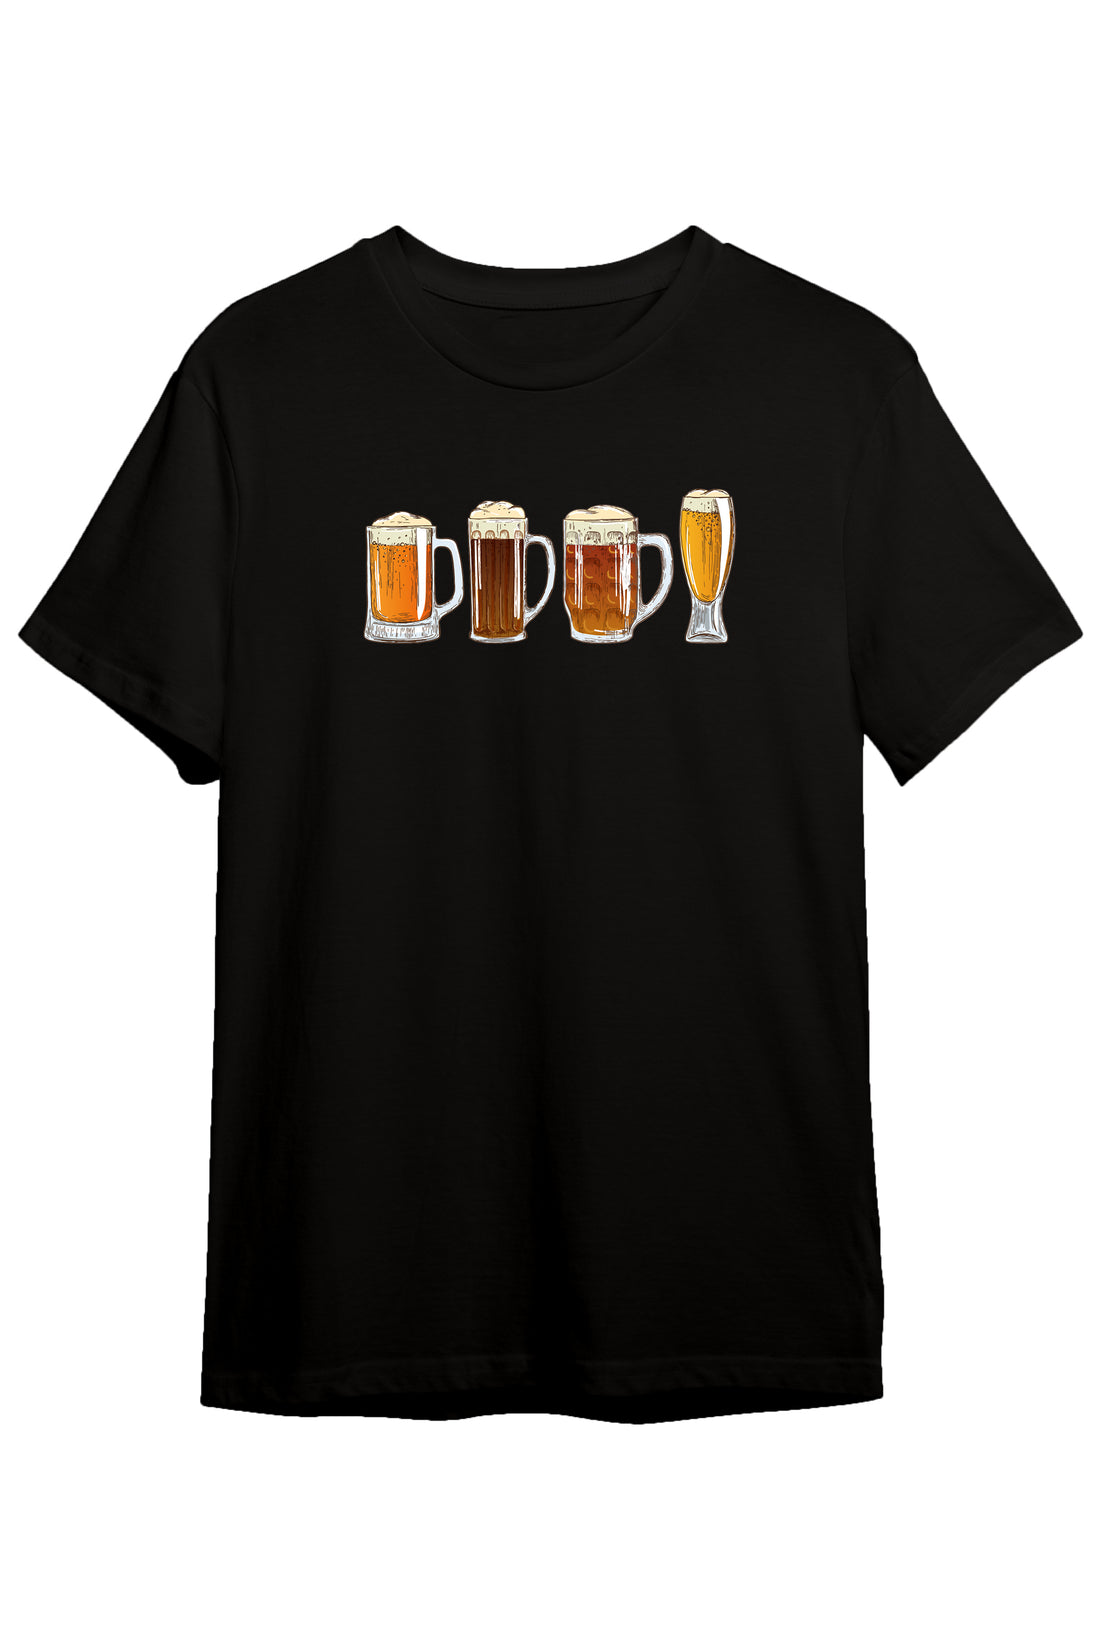 Beer - Regular Tshirt